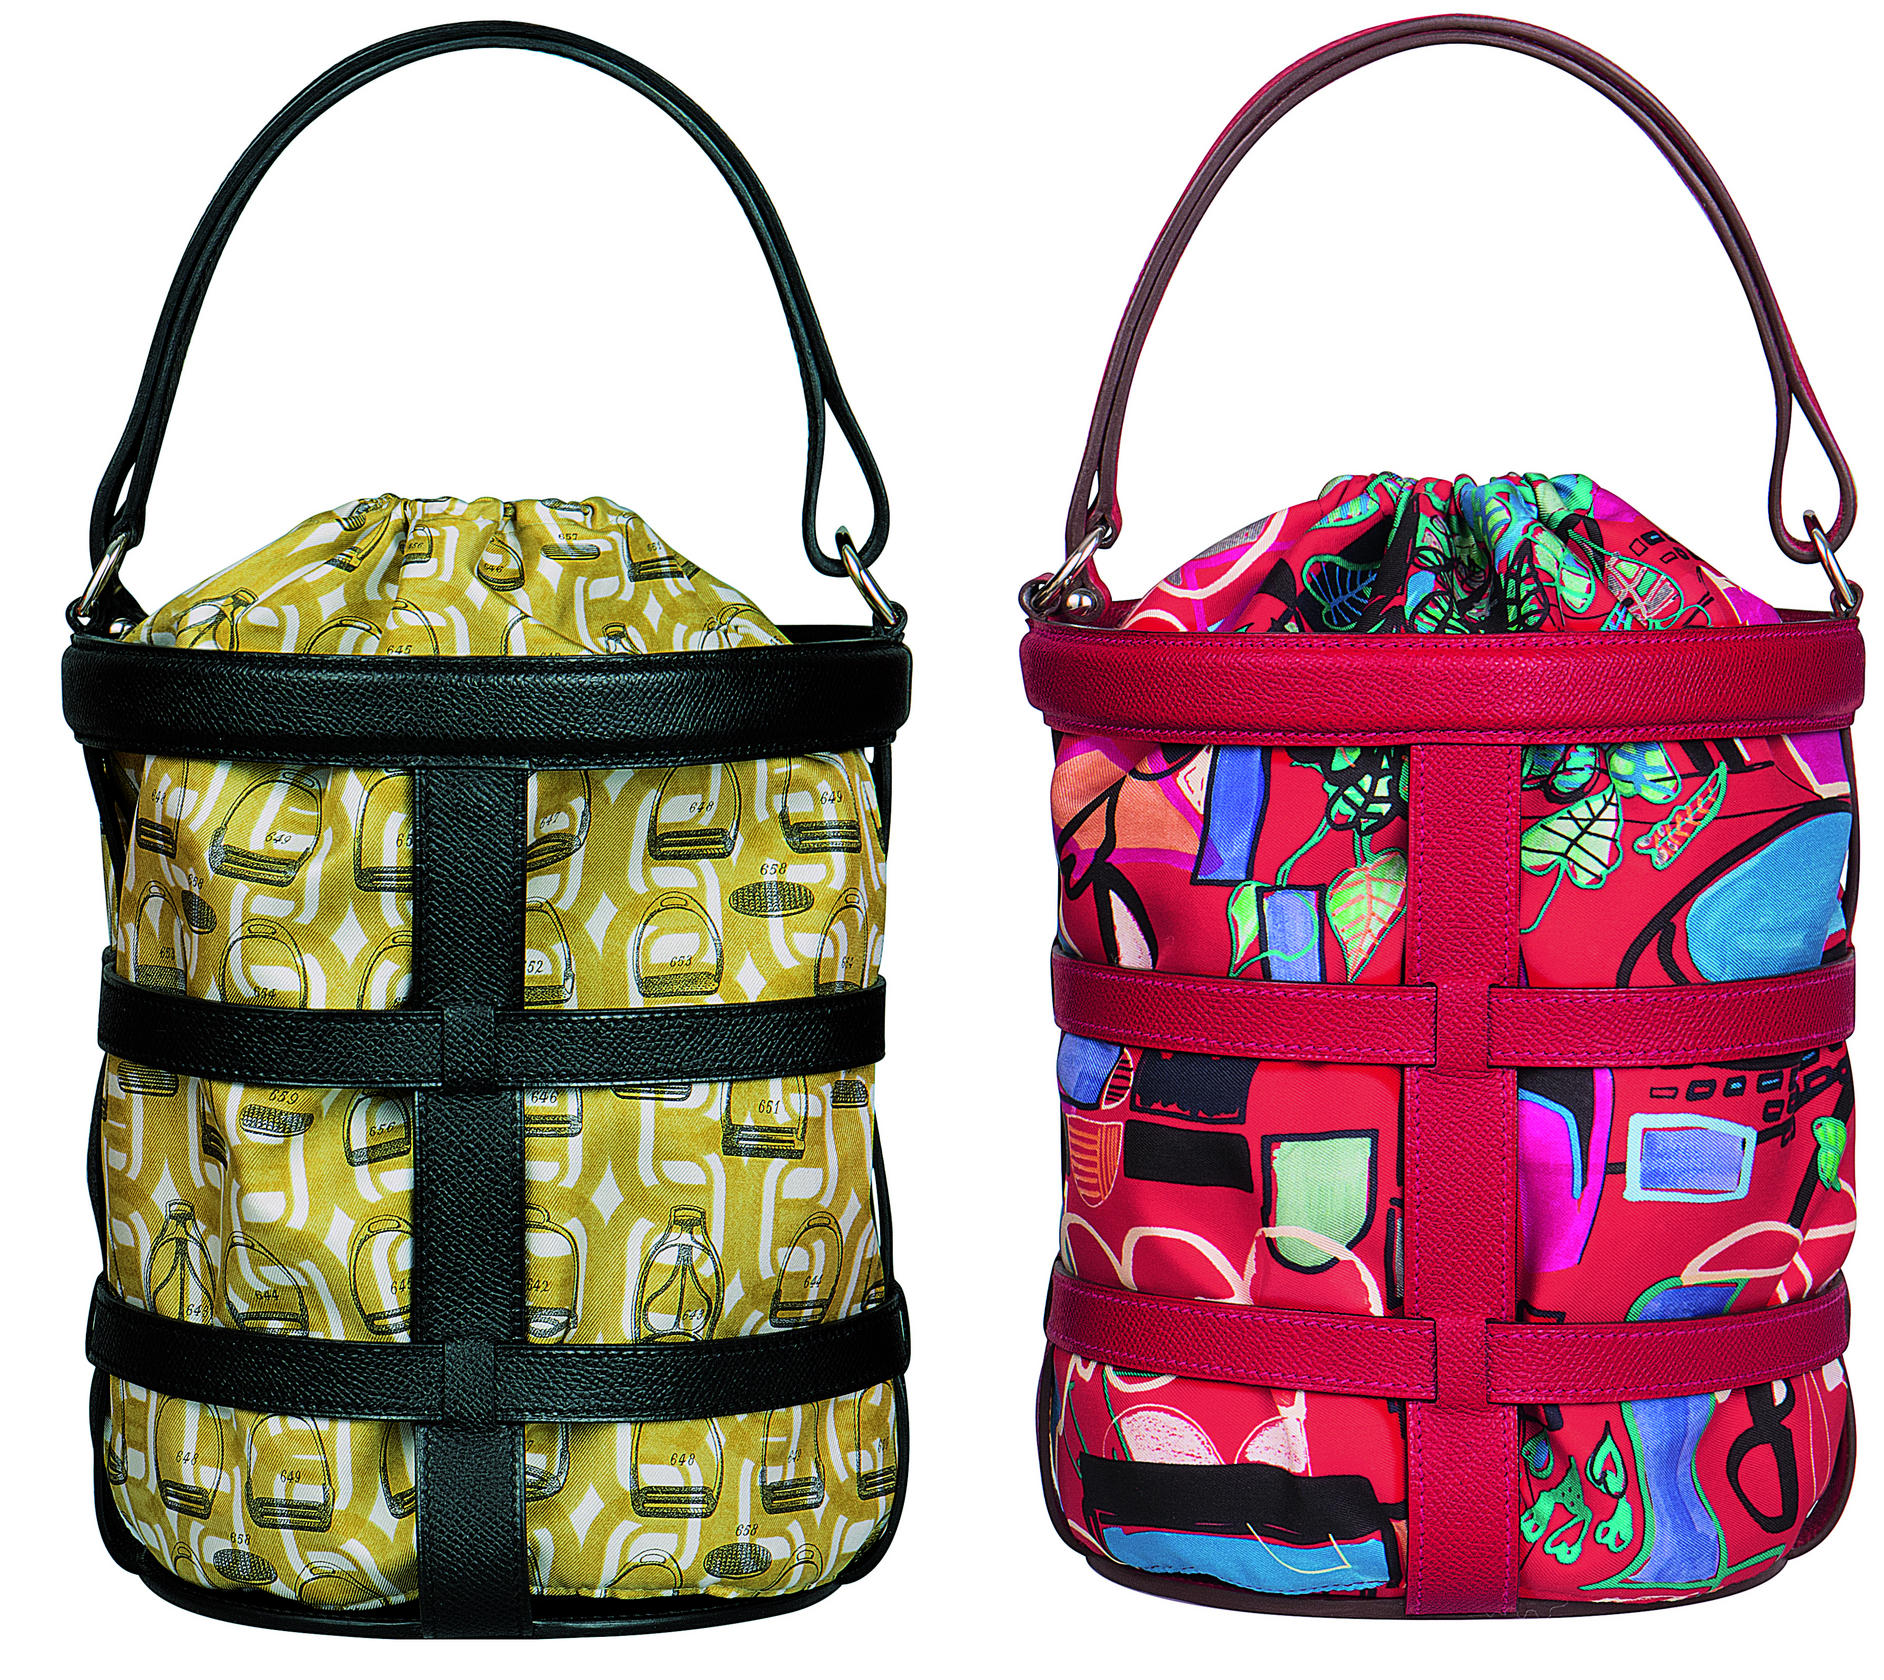 Louis Vuitton Petite Malle Handbag Limited Edition Tribal Print Leather